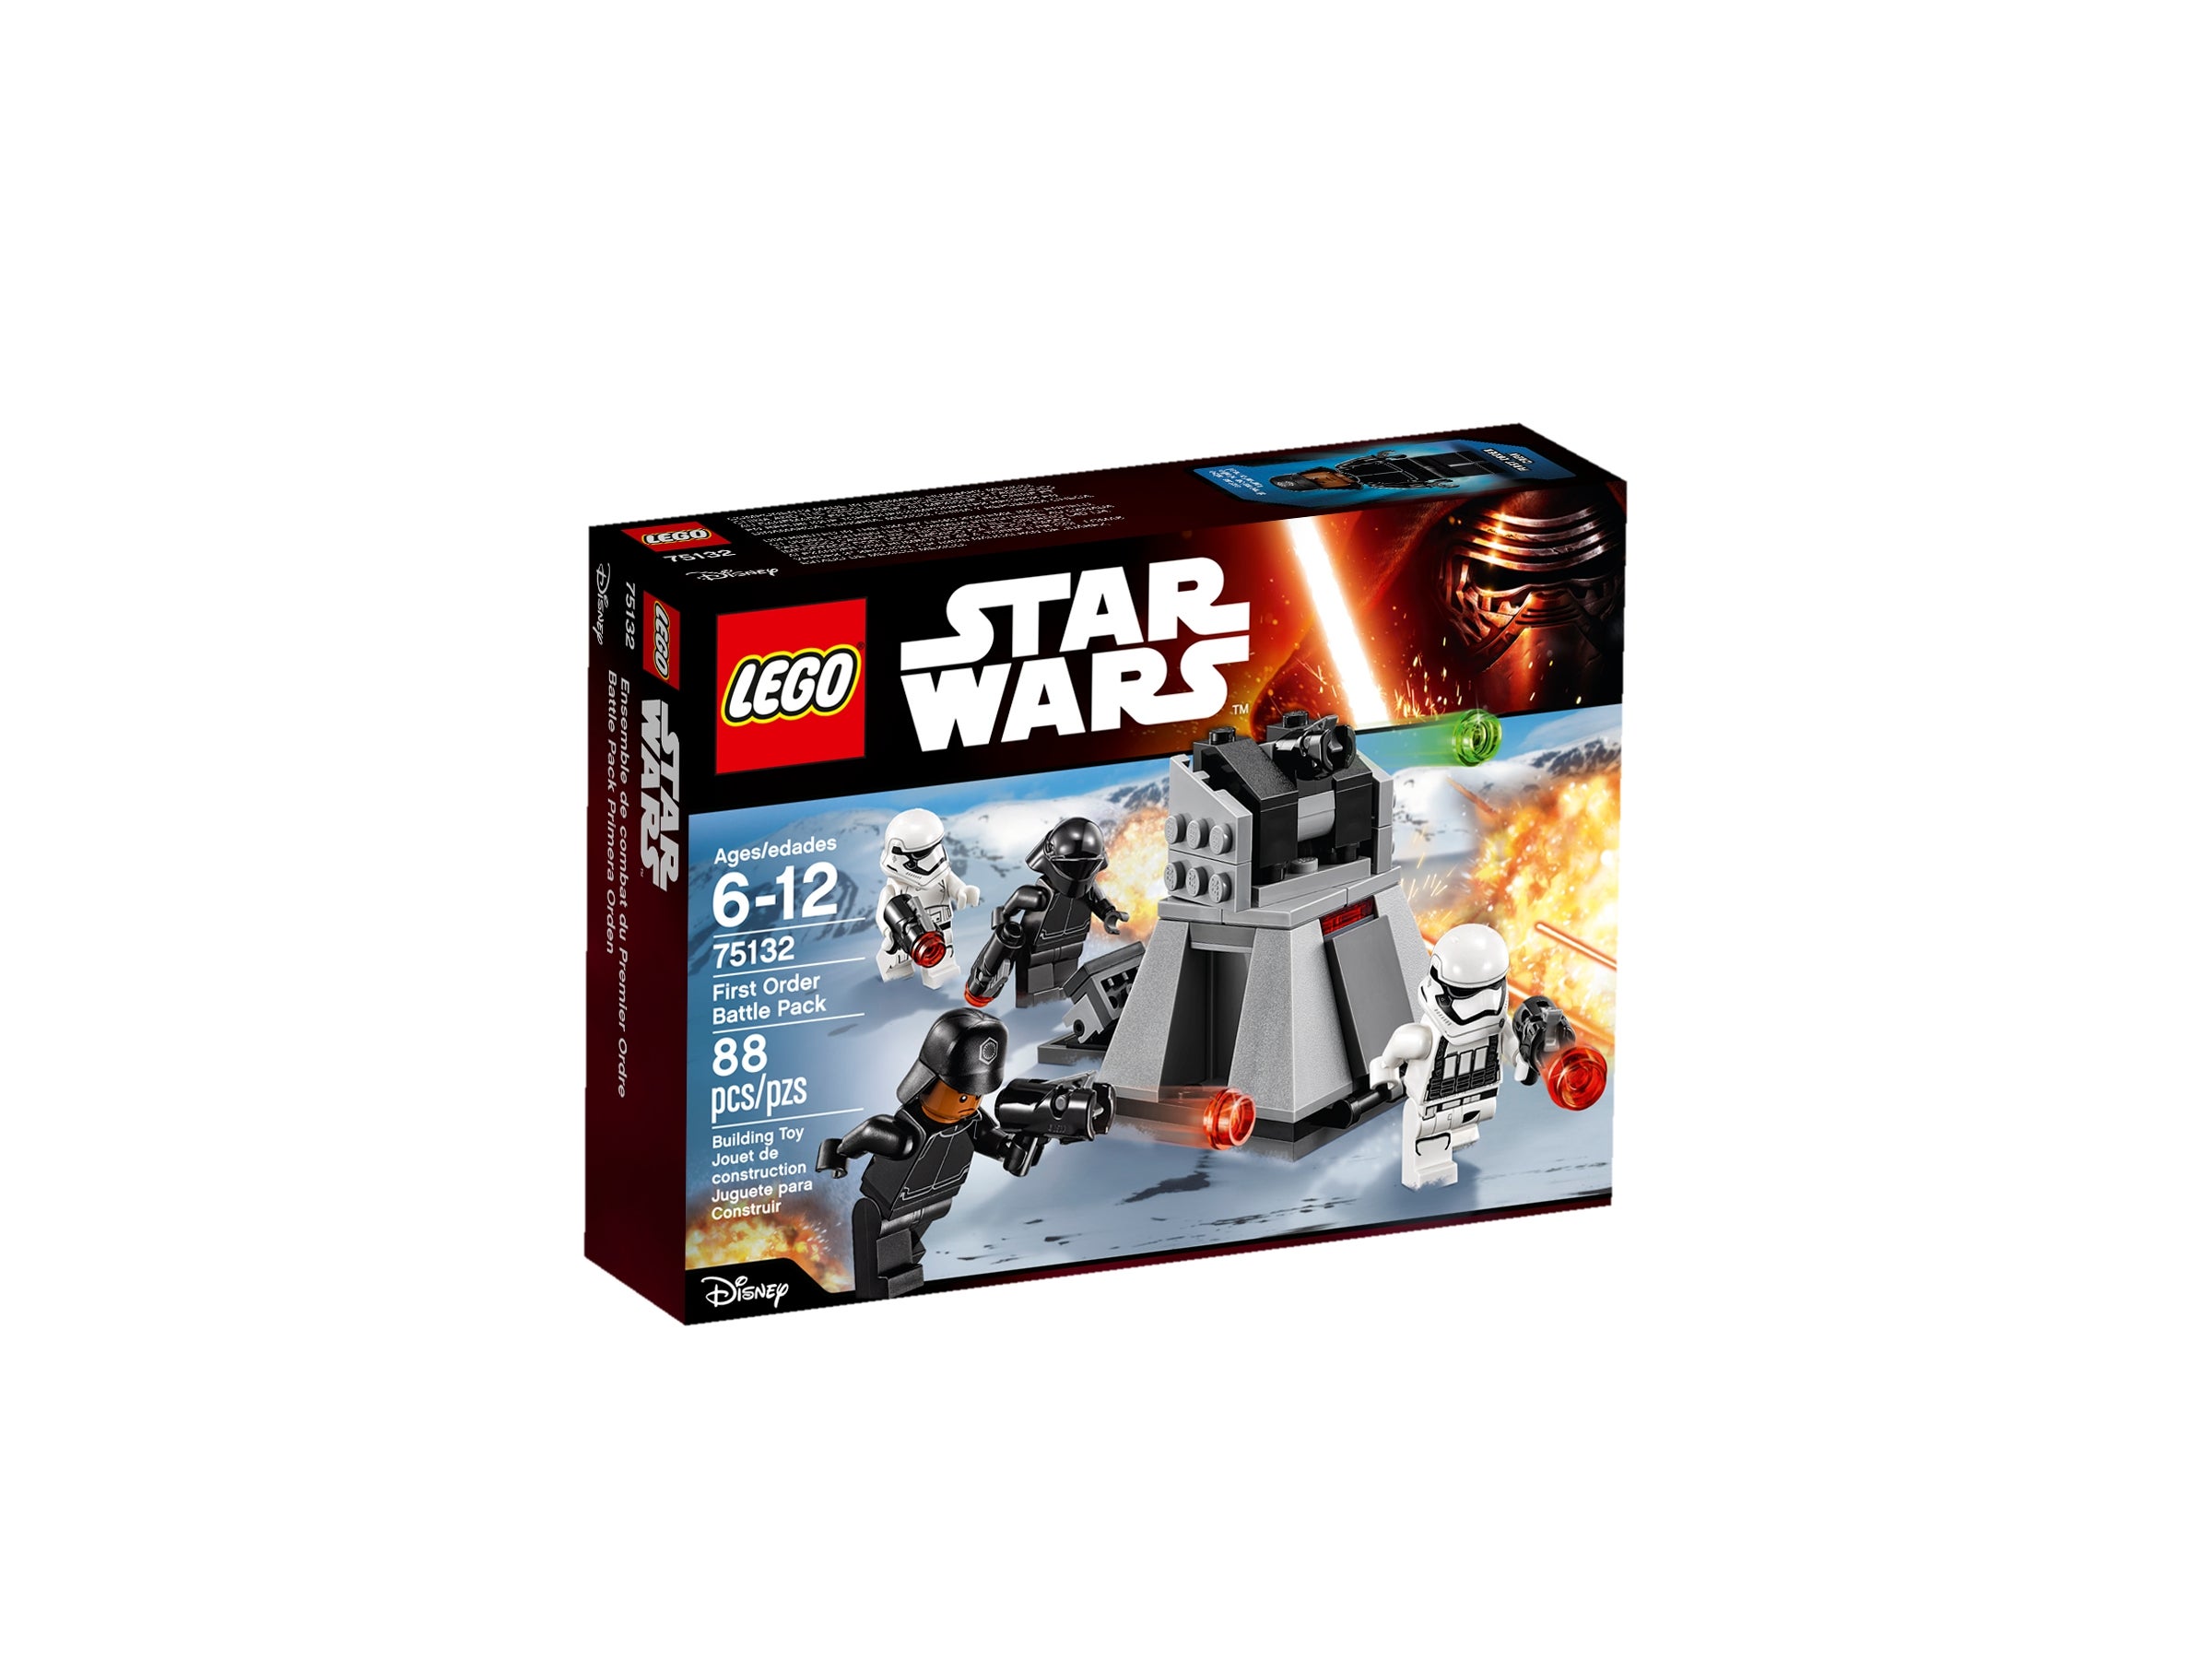 LEGO 75132 STAR WARS First Order Battle Pack